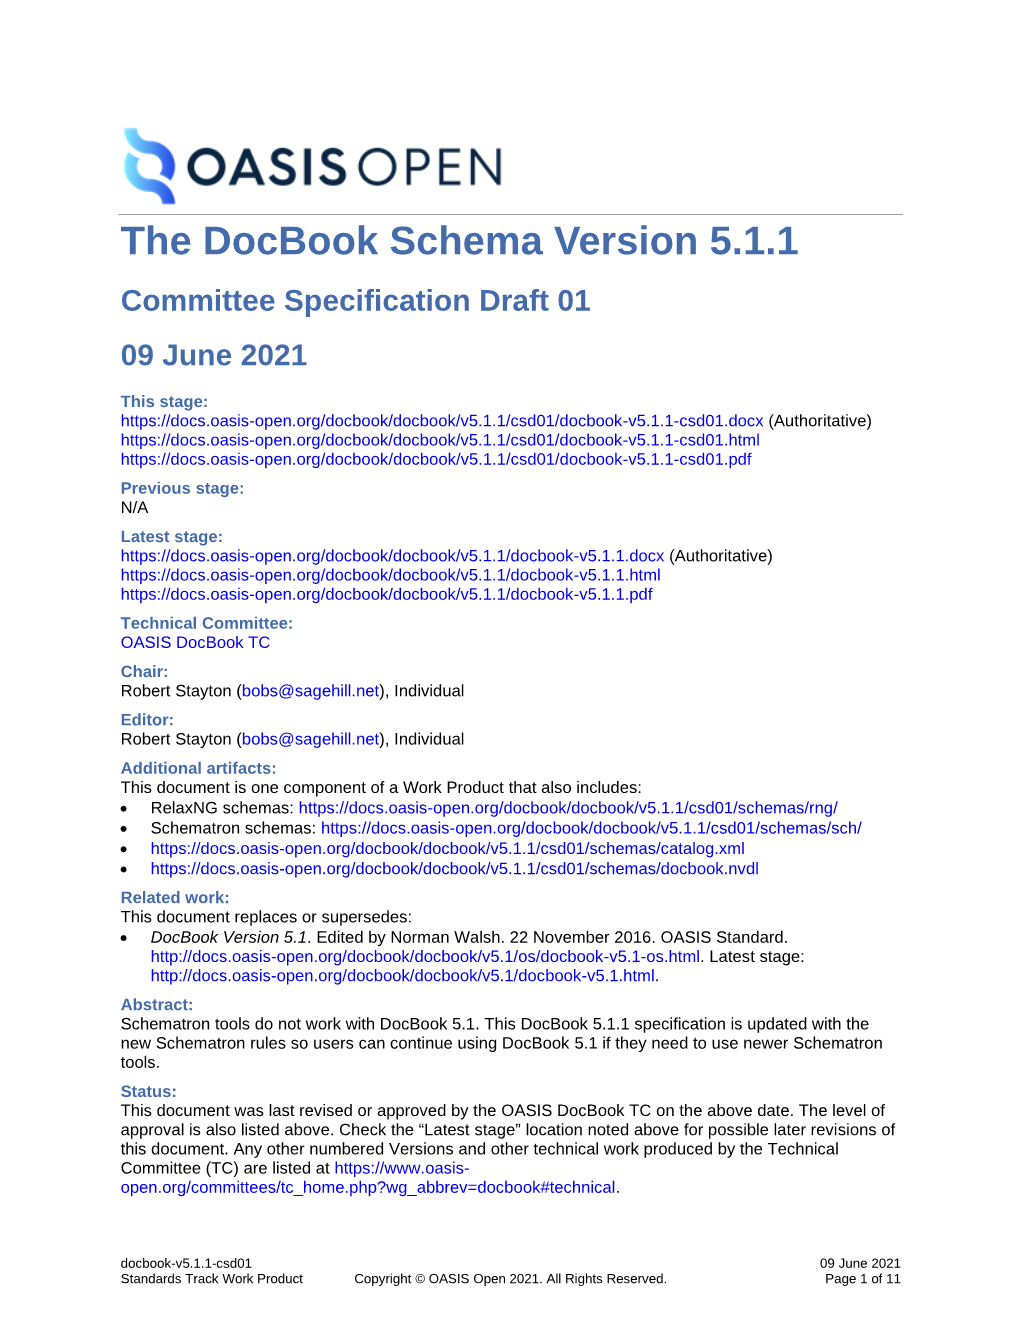 The Docbook Schema Version 5.1.1 Committee Specification Draft 01 09 June 2021